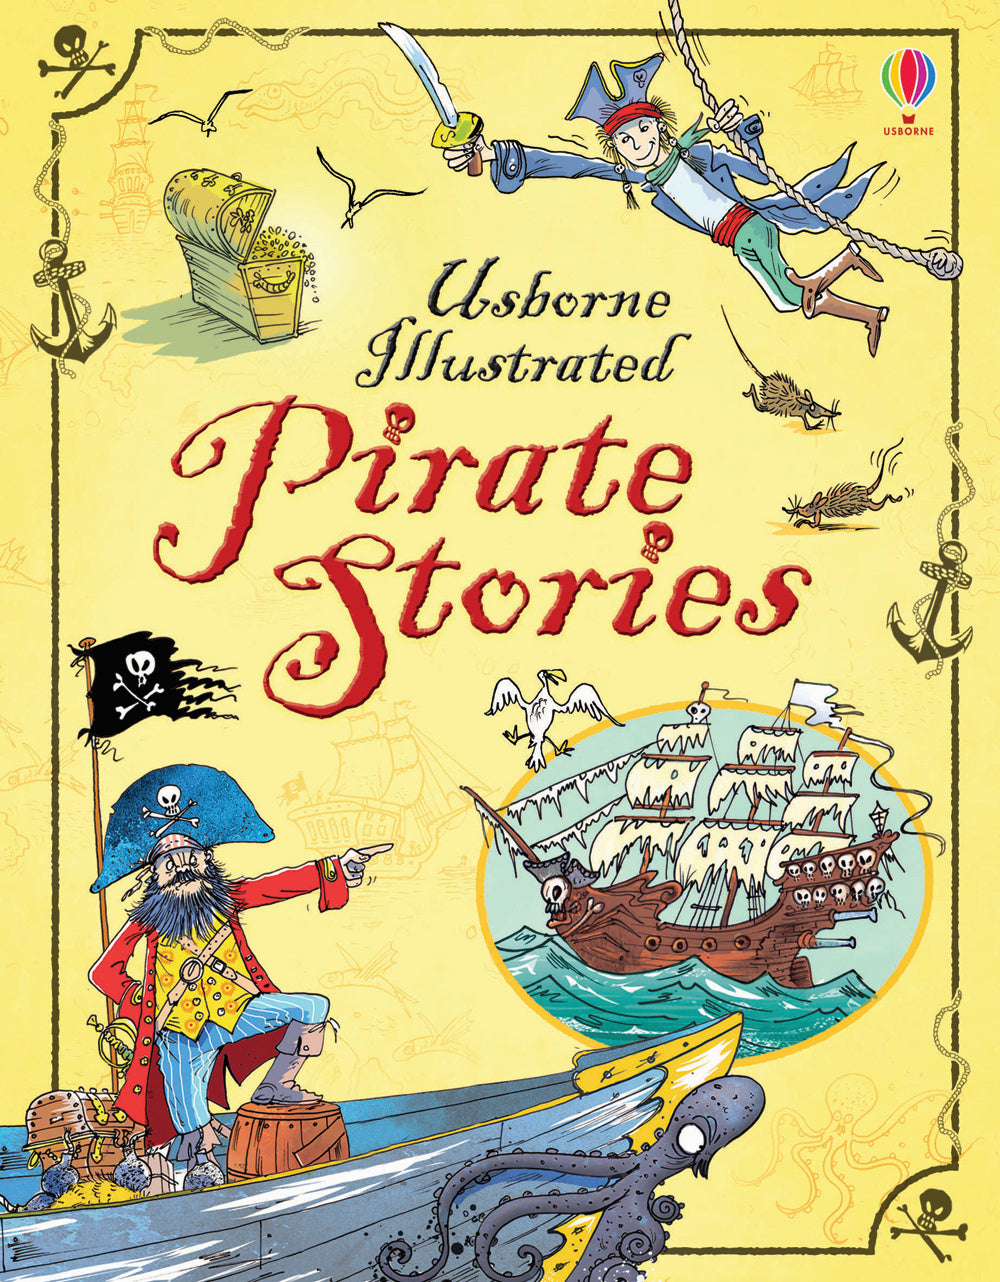 Pirate stories.